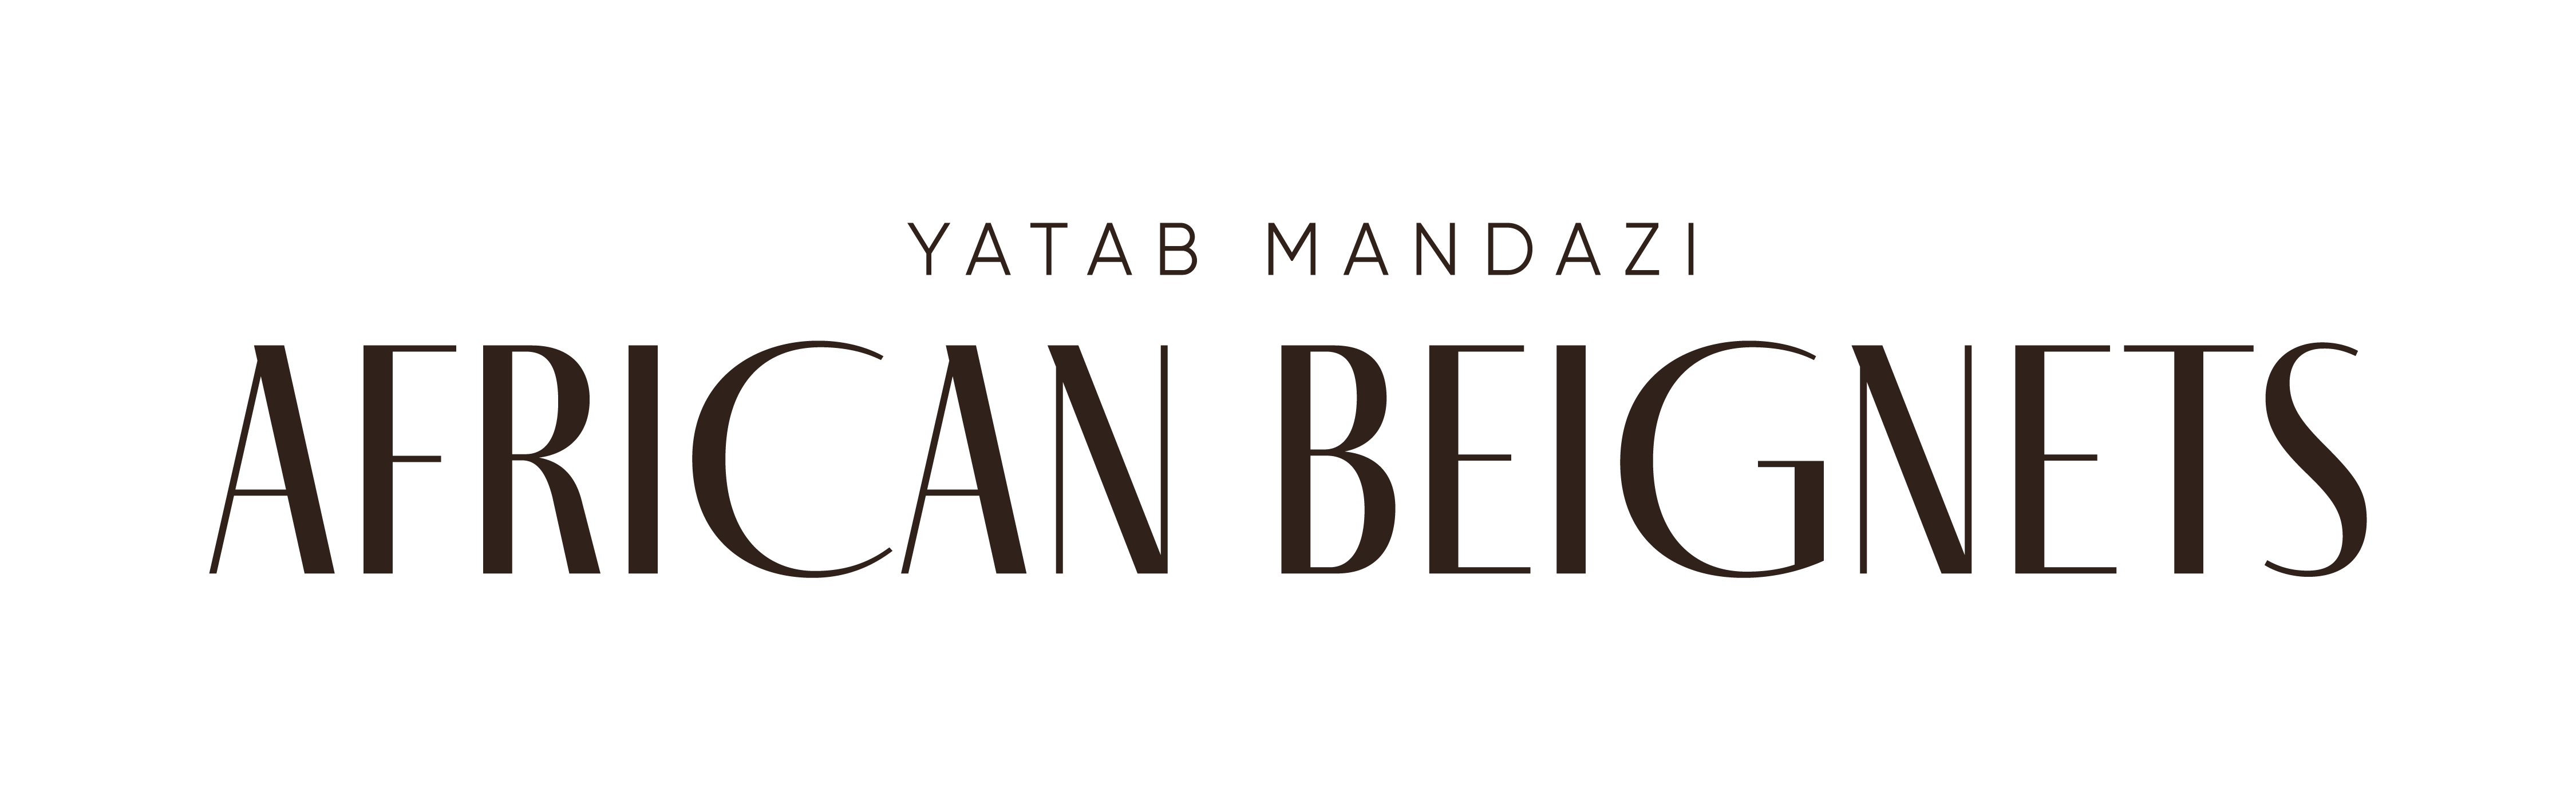 Yatab Mandazi African Beignets